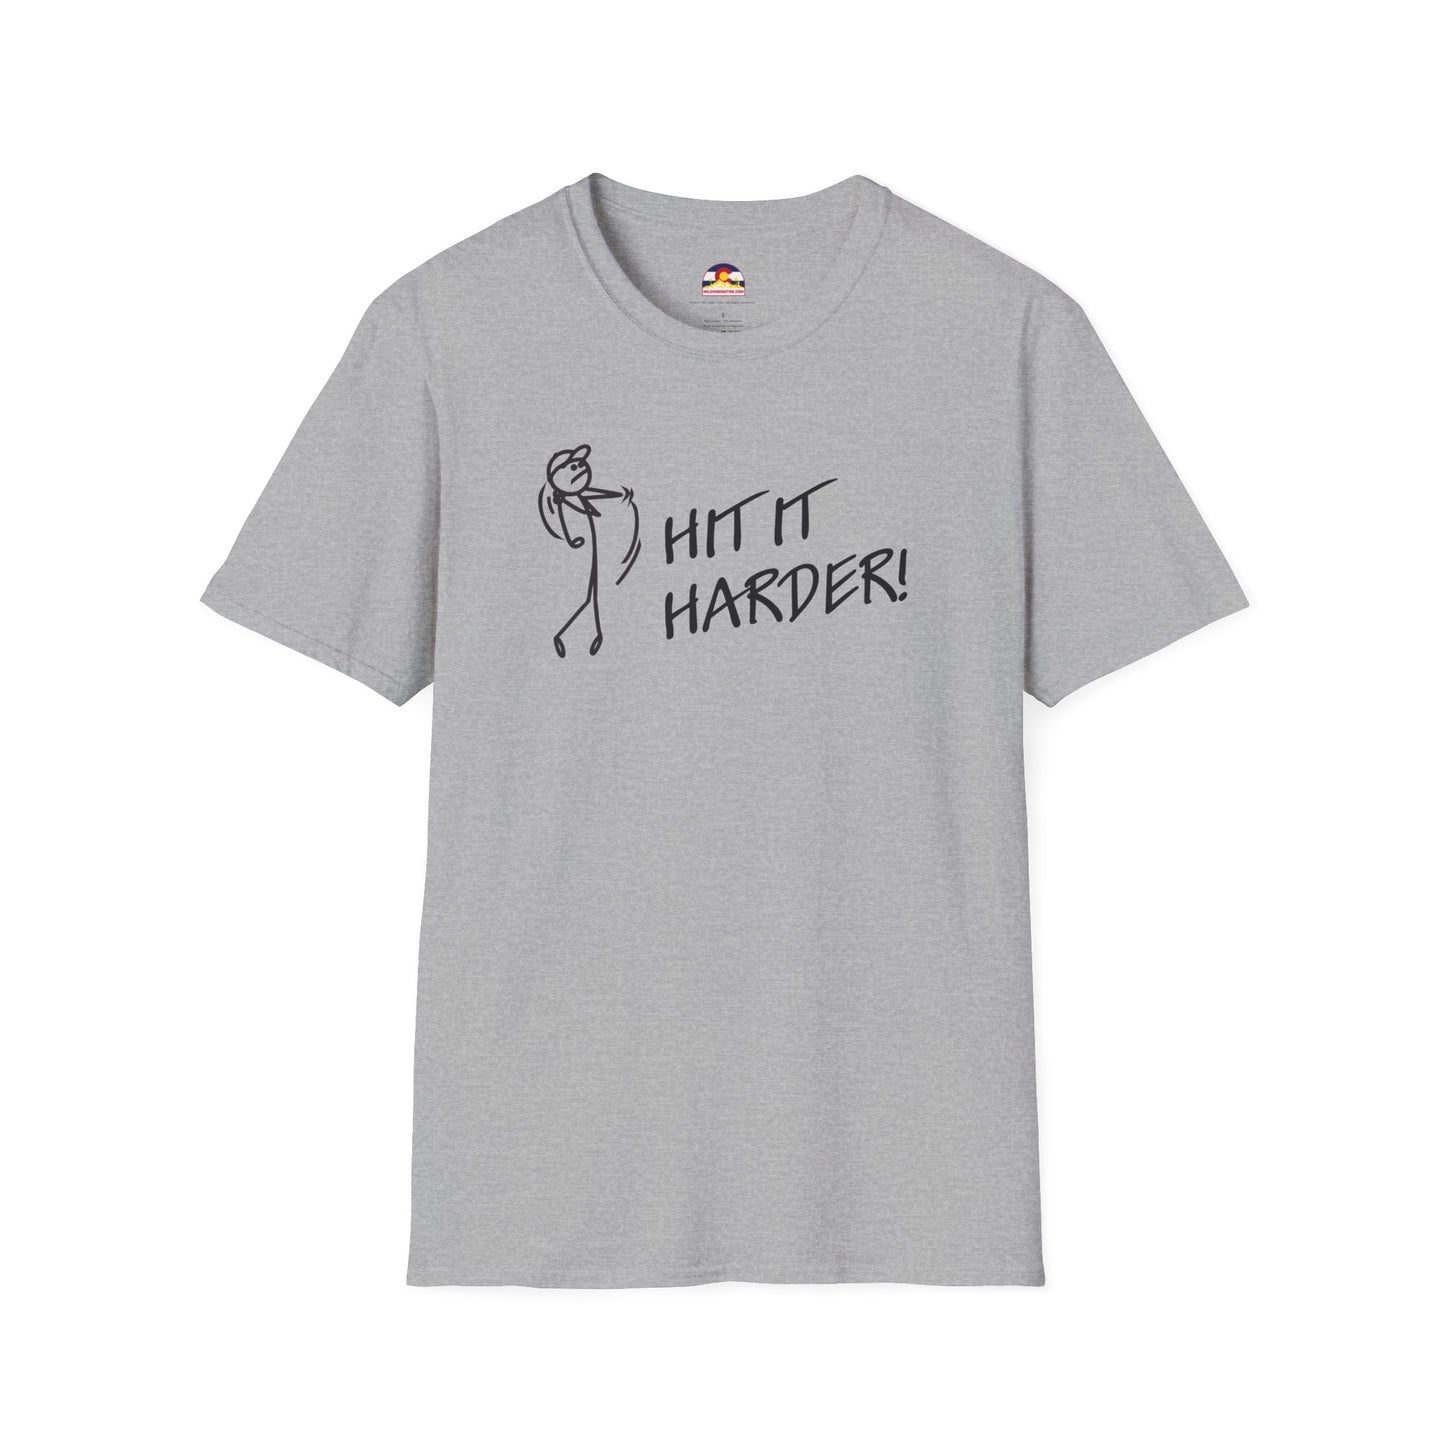 Hit It Harder - Men's T-Shirt